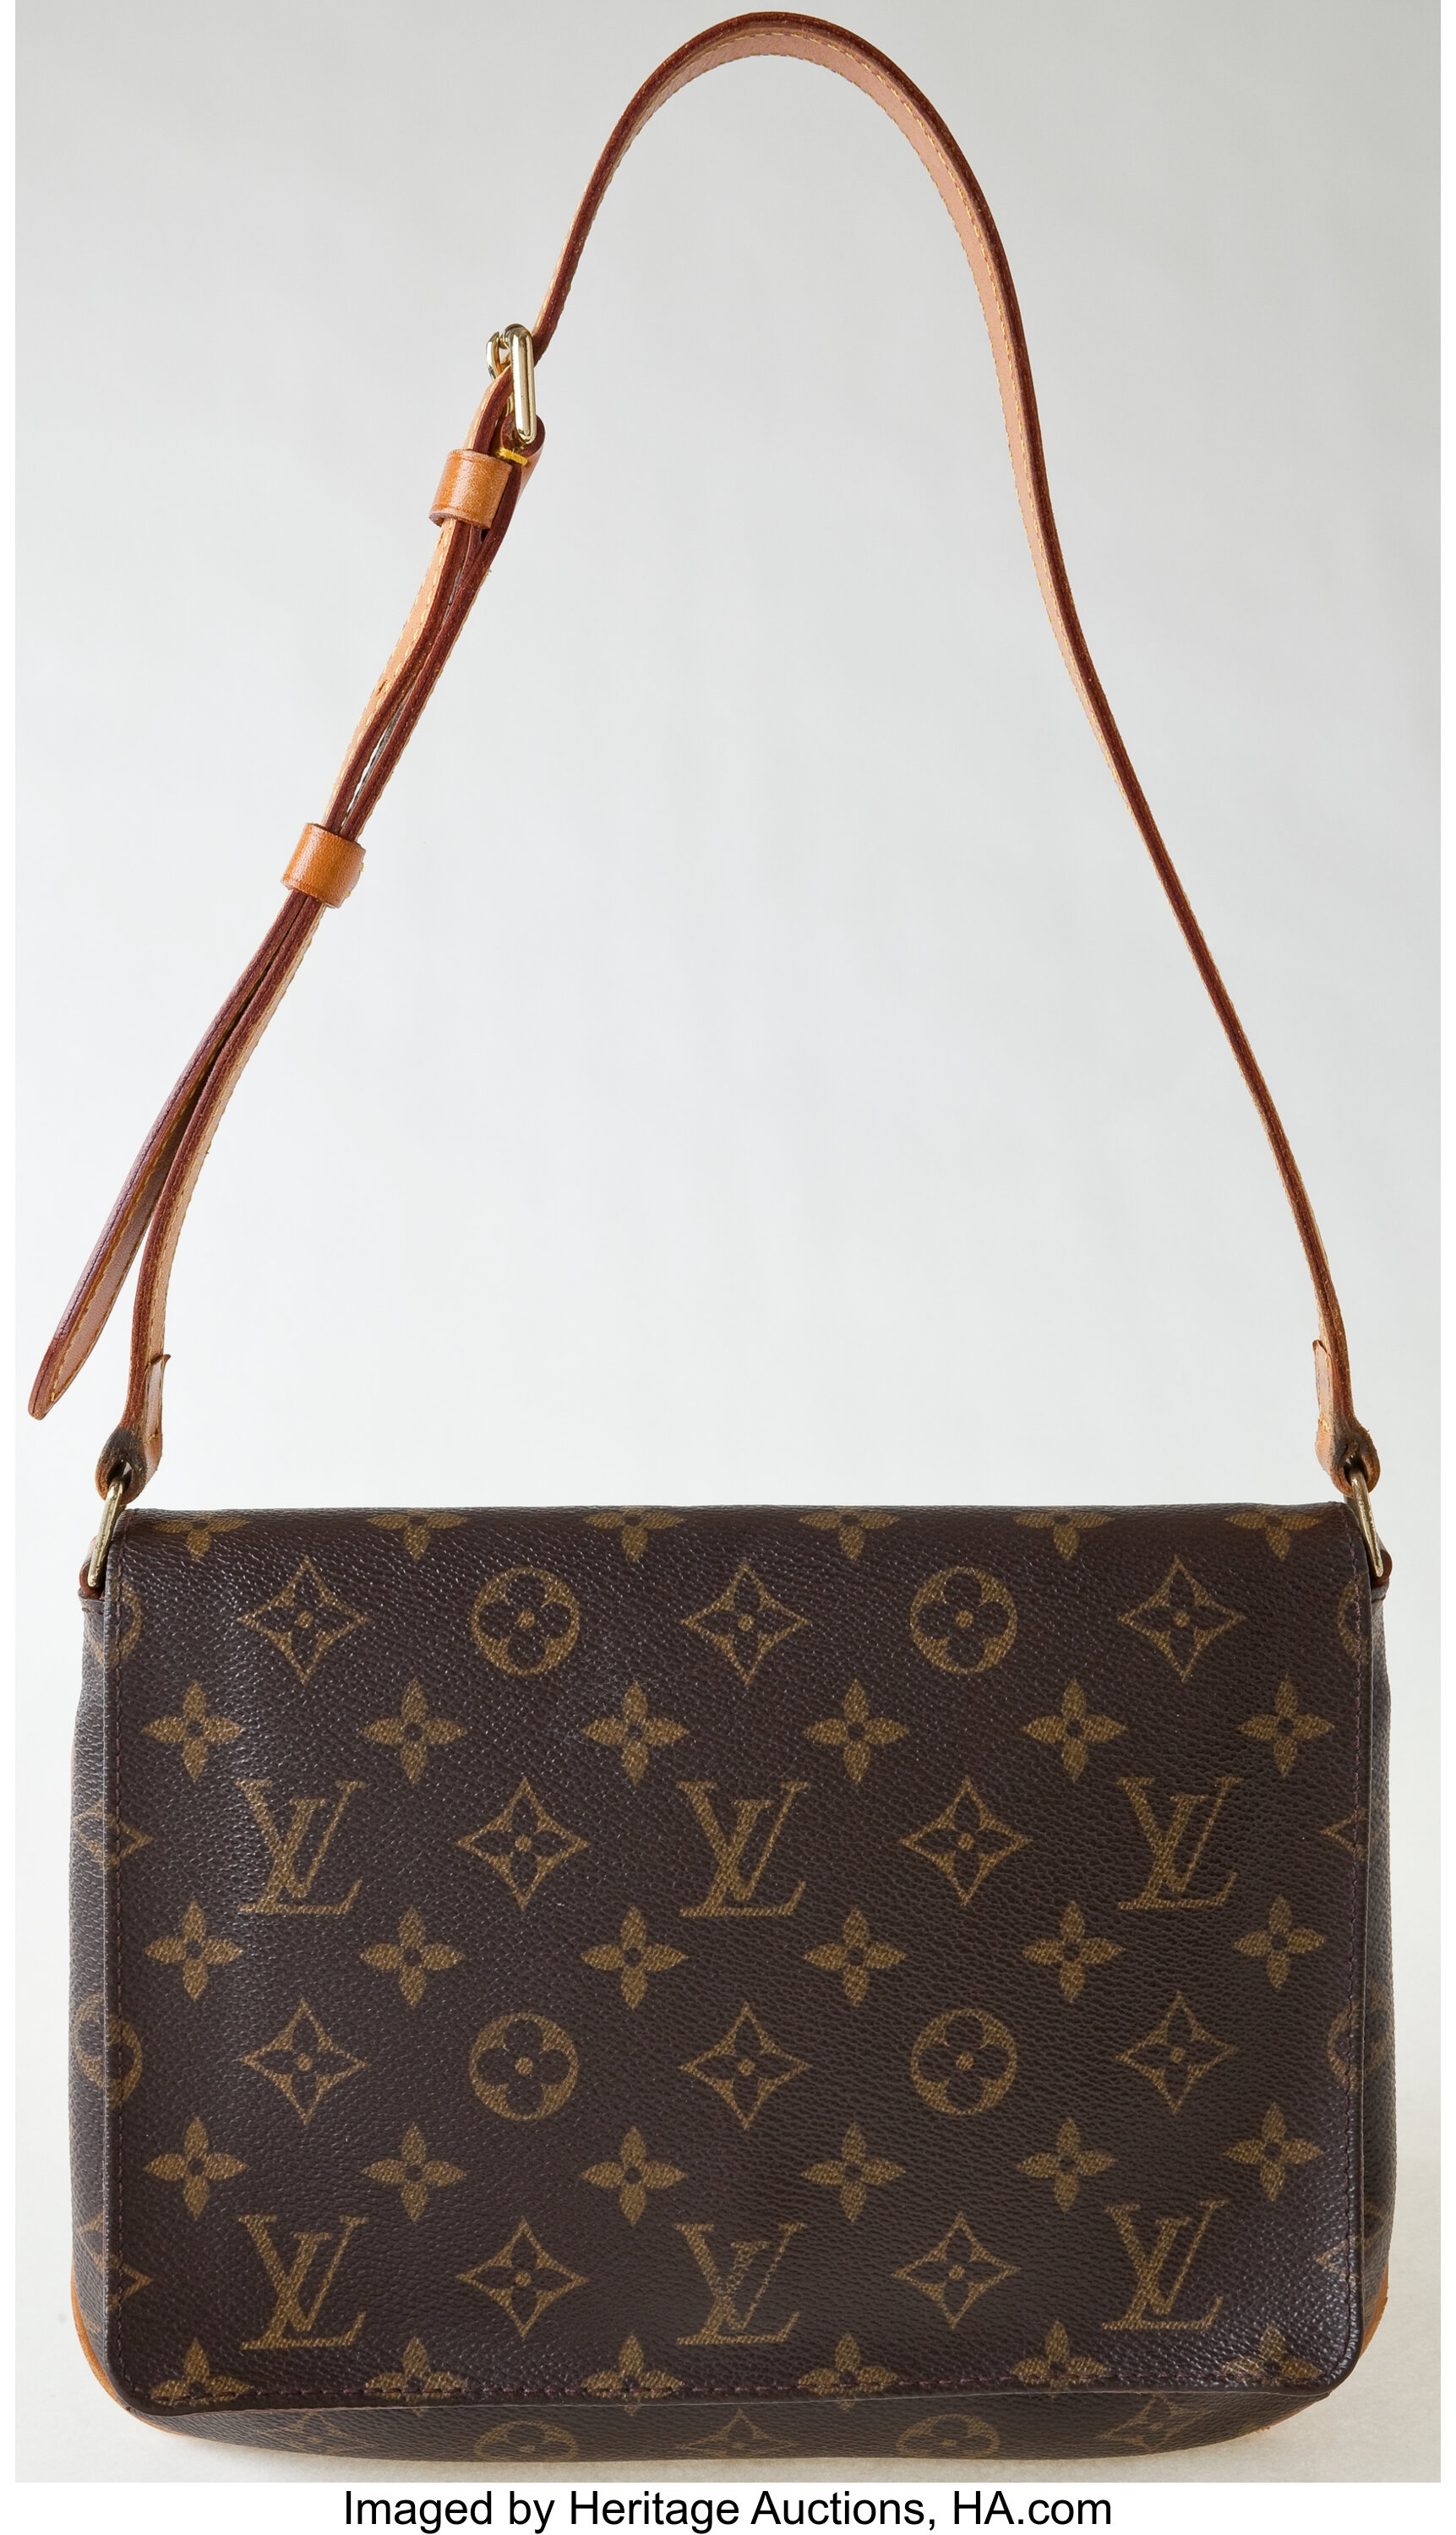 Authentic LV Louis Vuitton Monogram musette tango bag